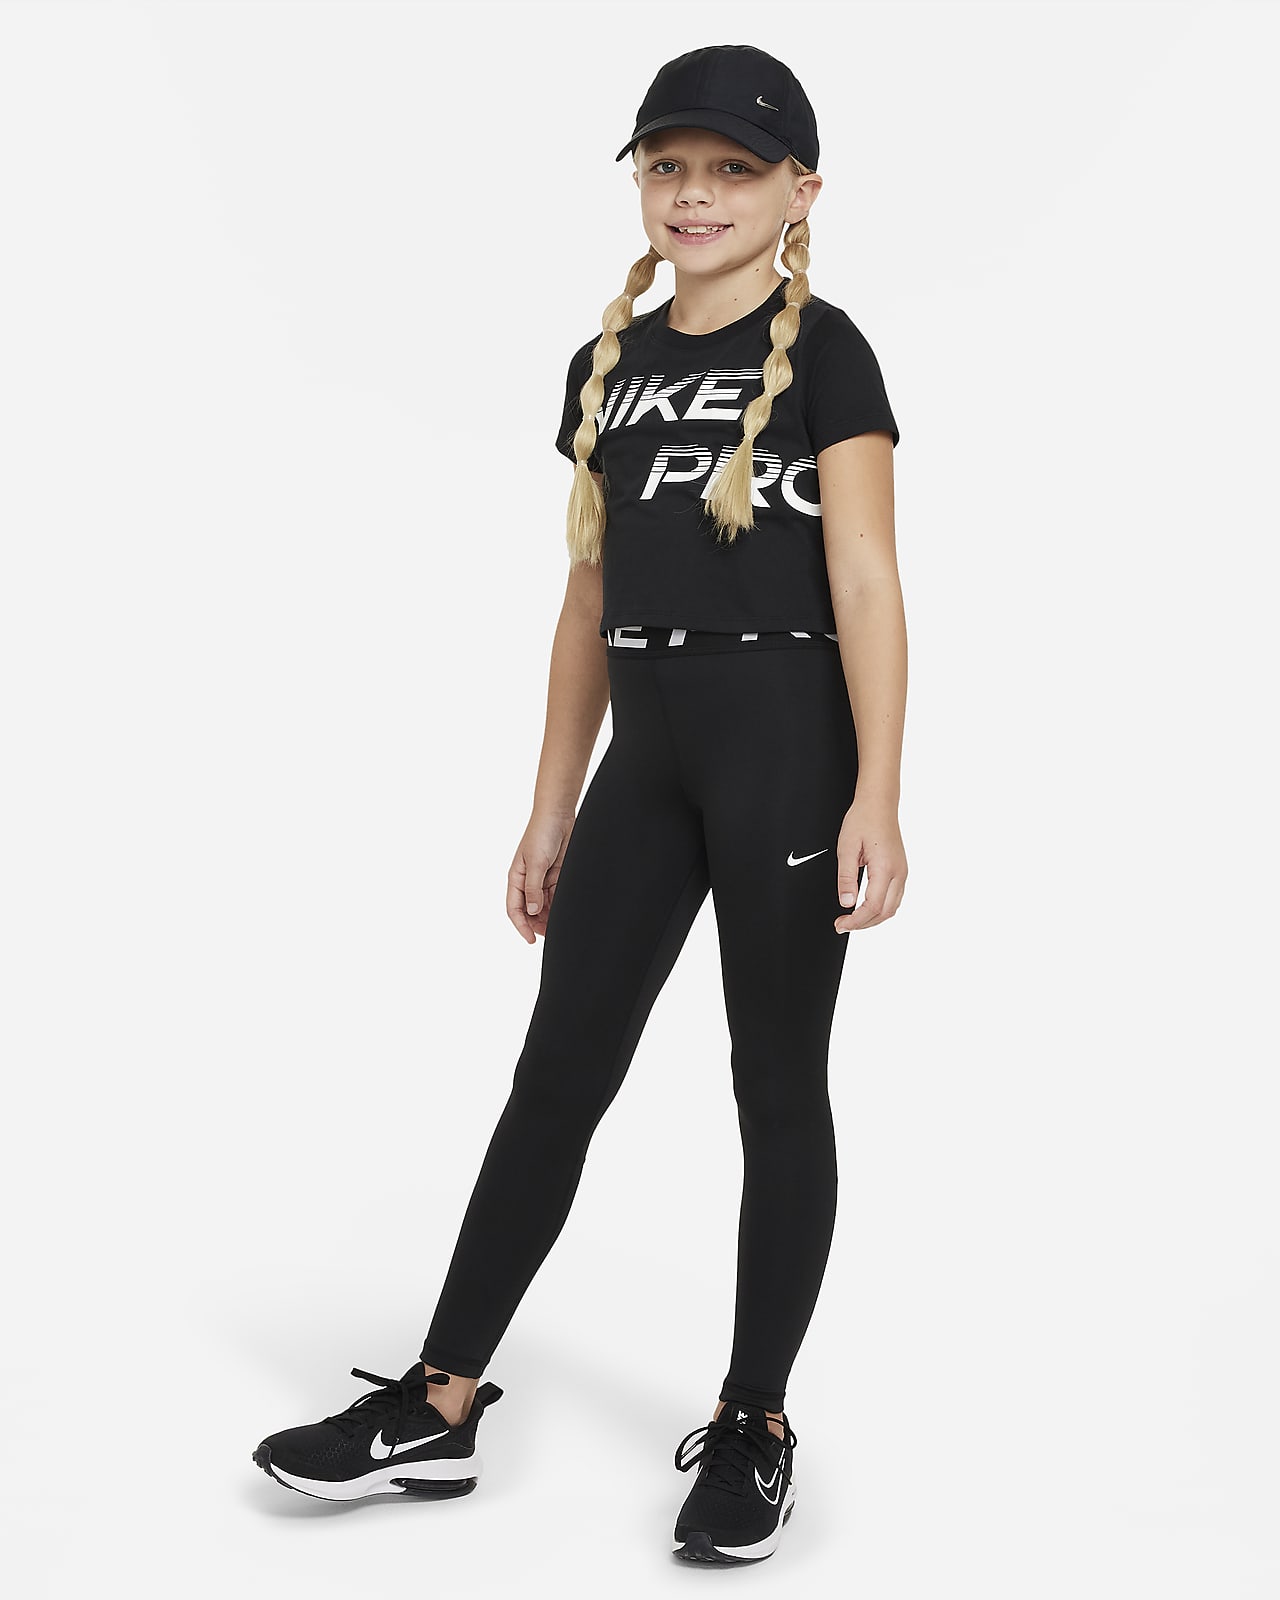 NIKE Dri-FIT One Girls Leggings Sportswear DD8015 NEW with TAGS Large